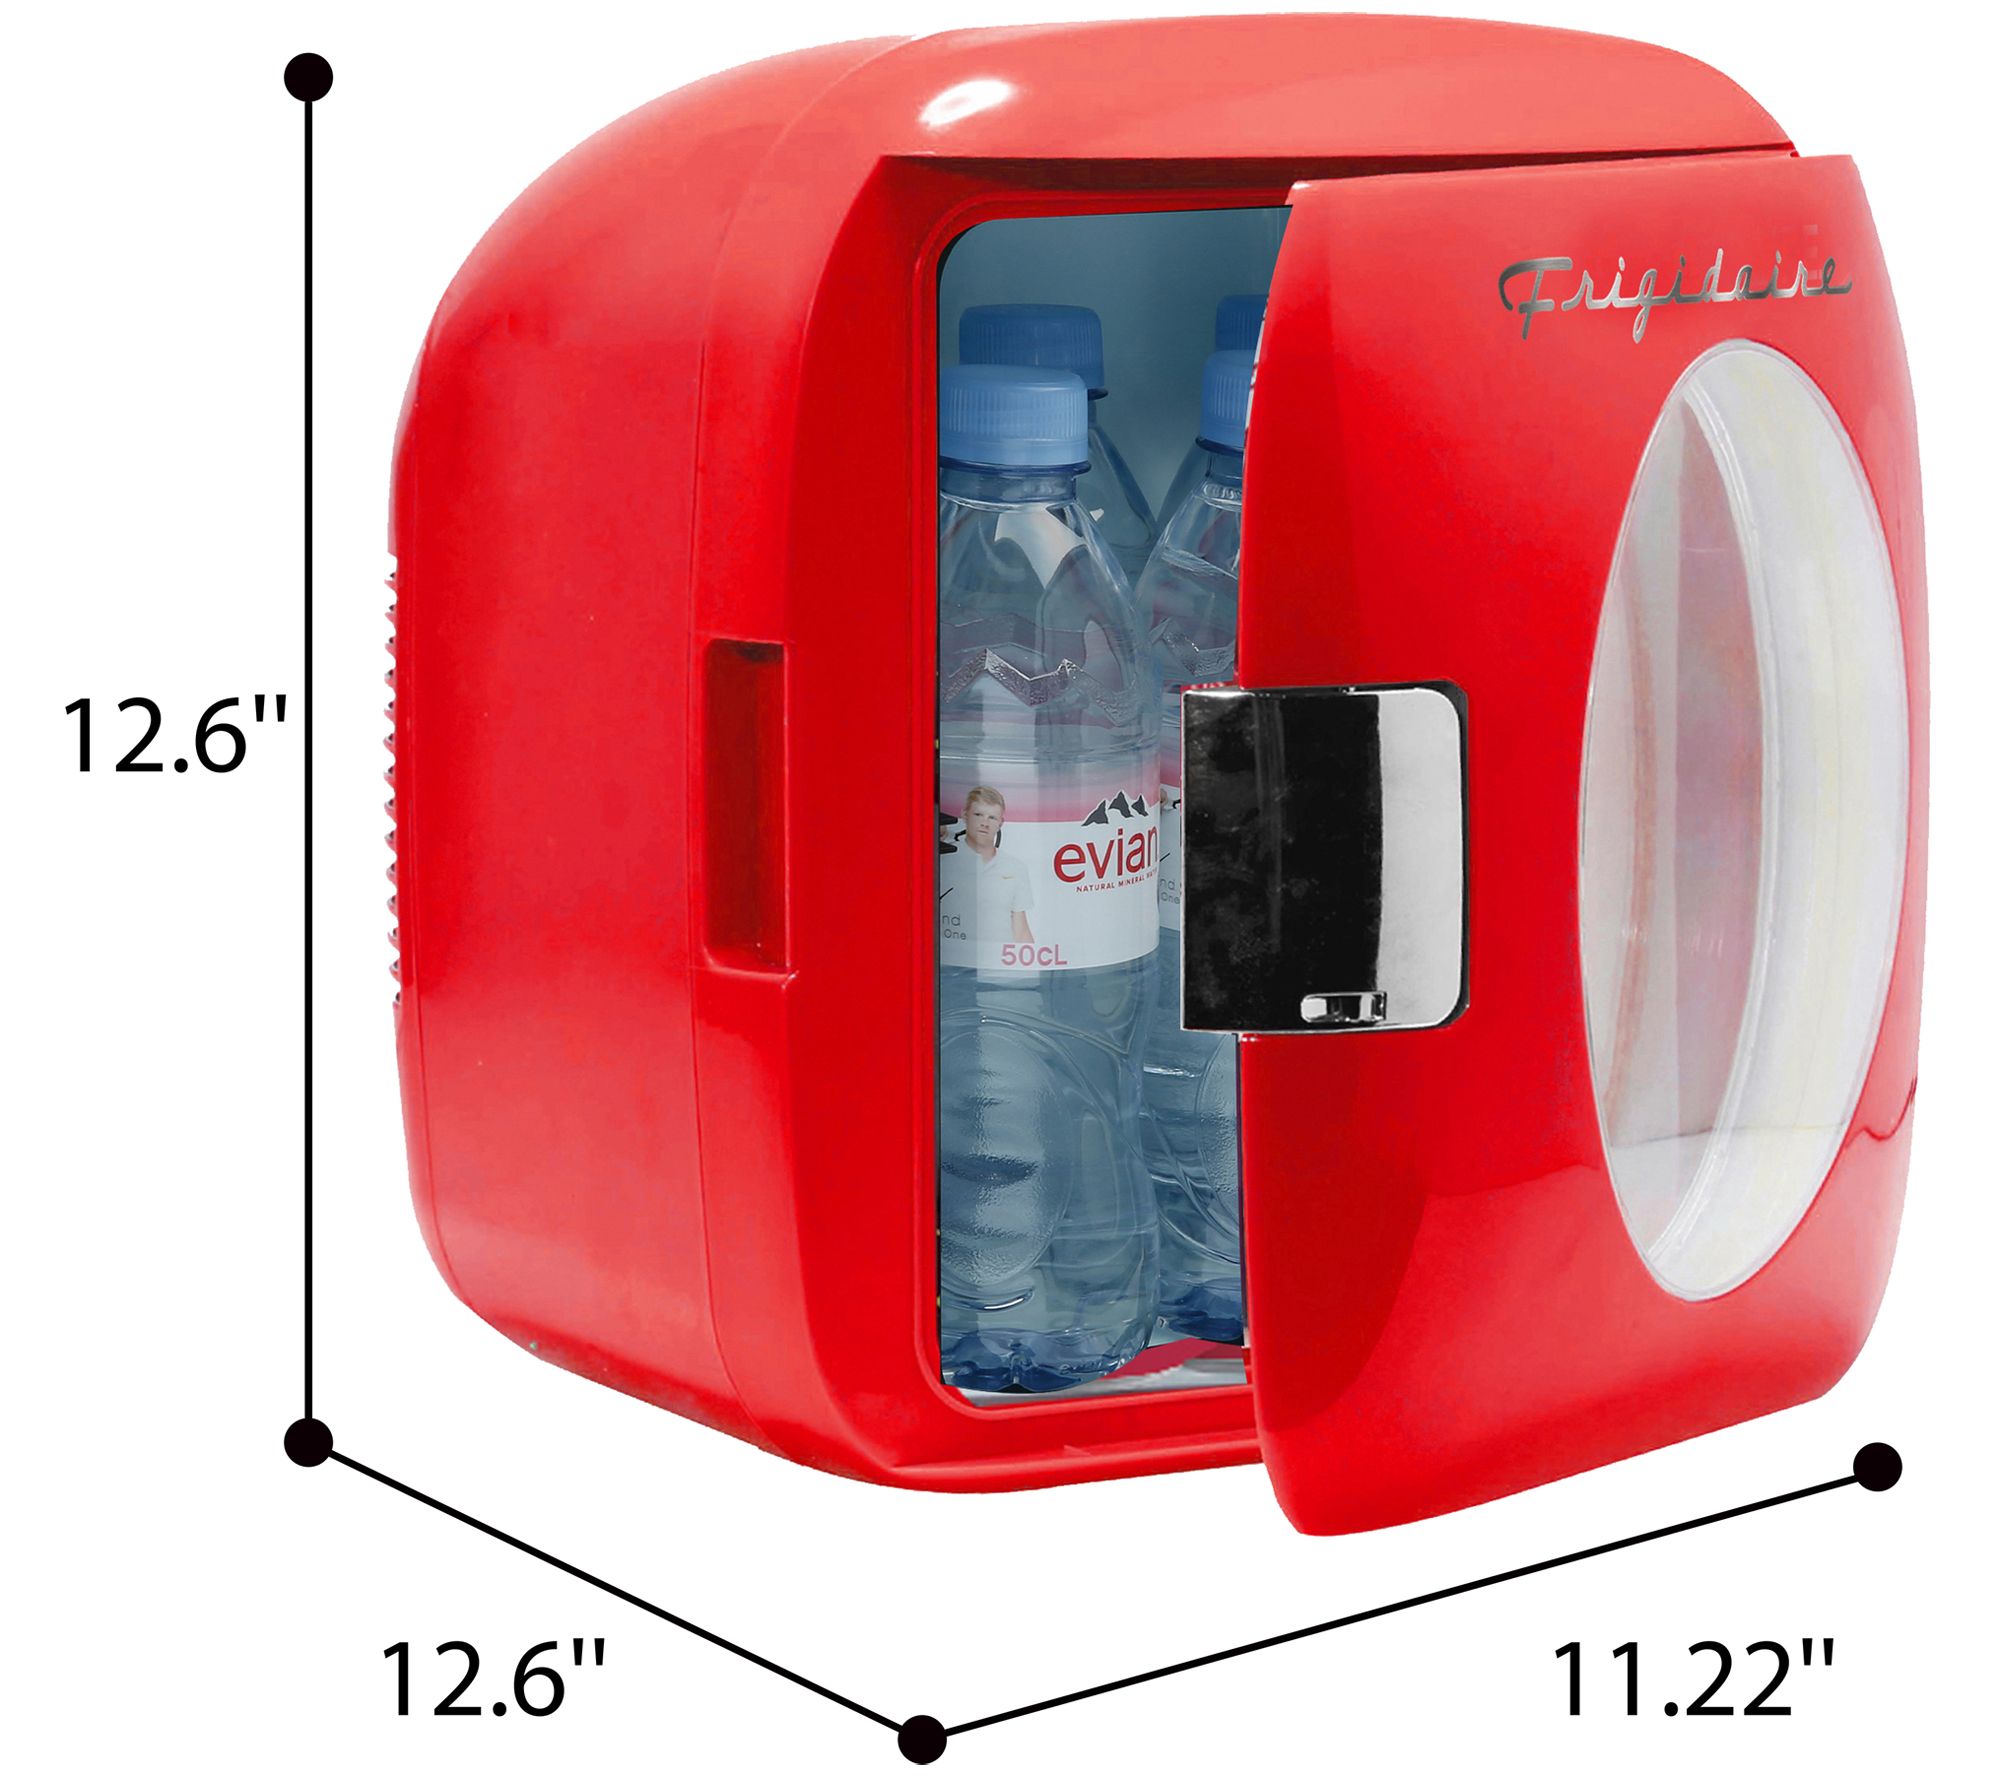 REFRIGIRATOR THOMSON 4.5cu ft - appliances - by owner - sale